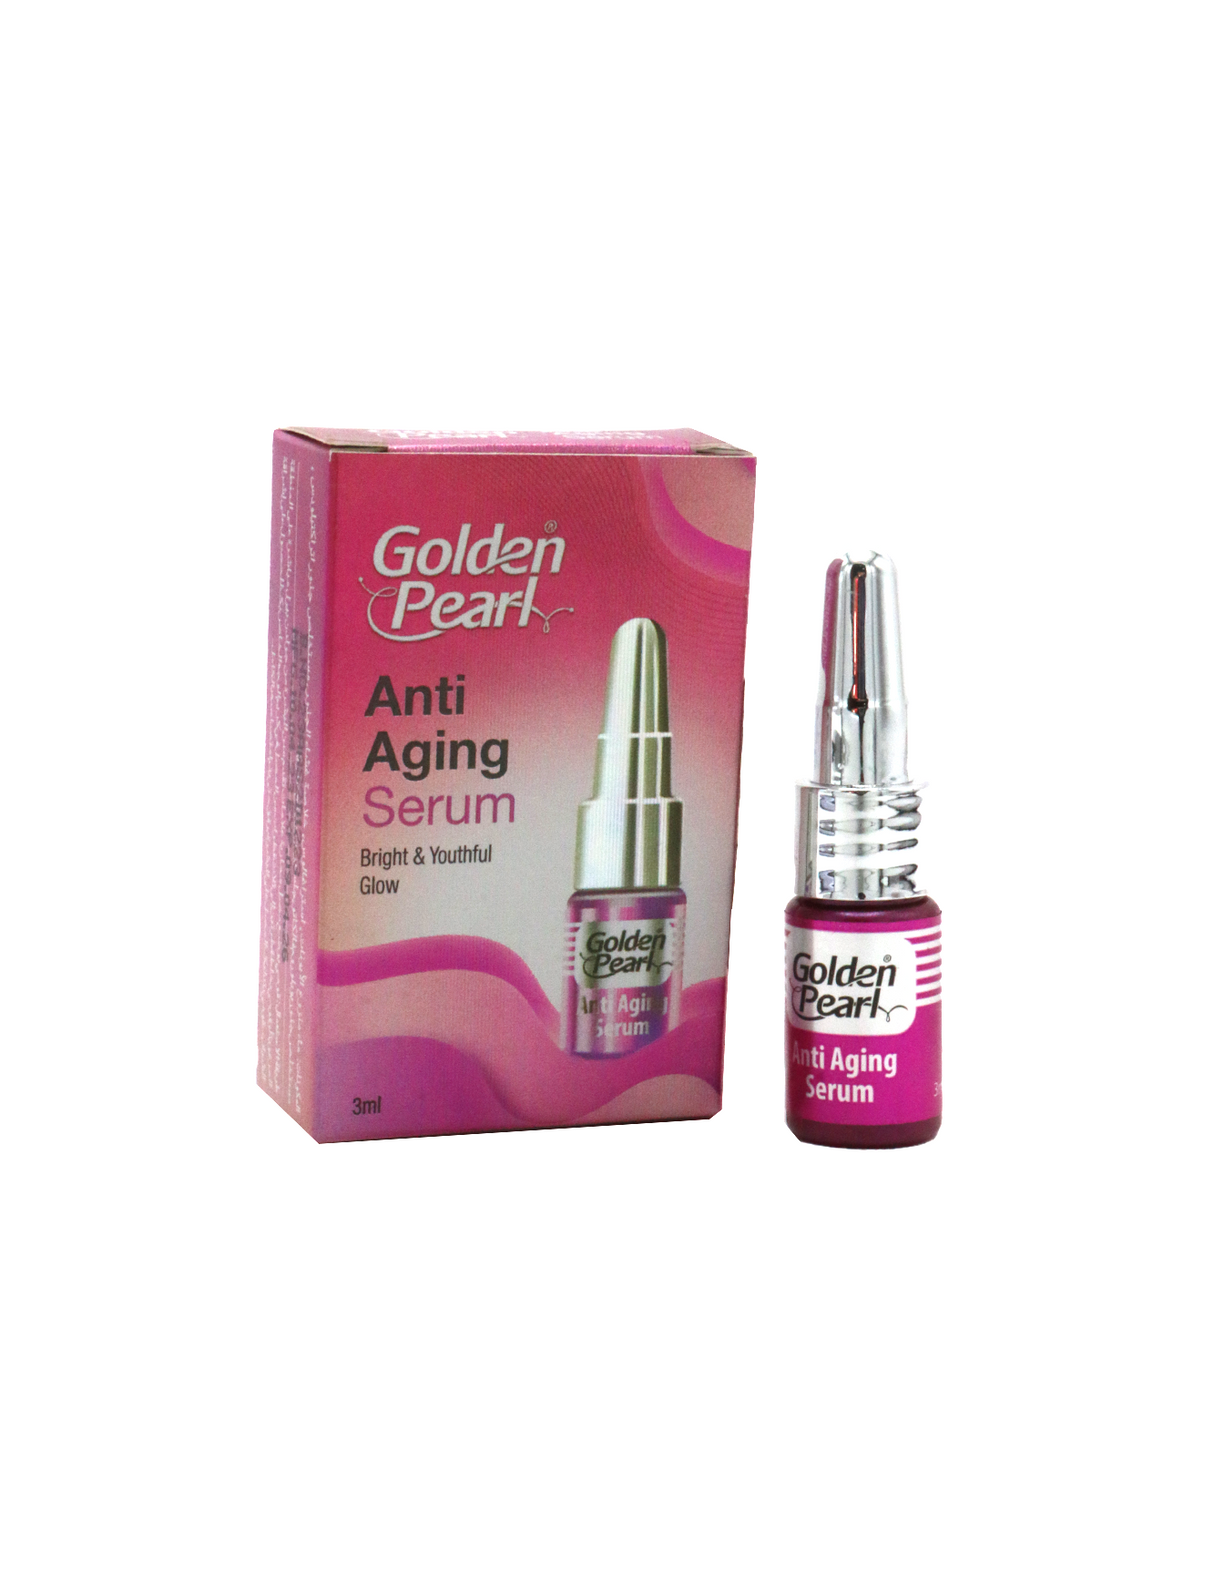 golden pearl anti aging serum 3ml